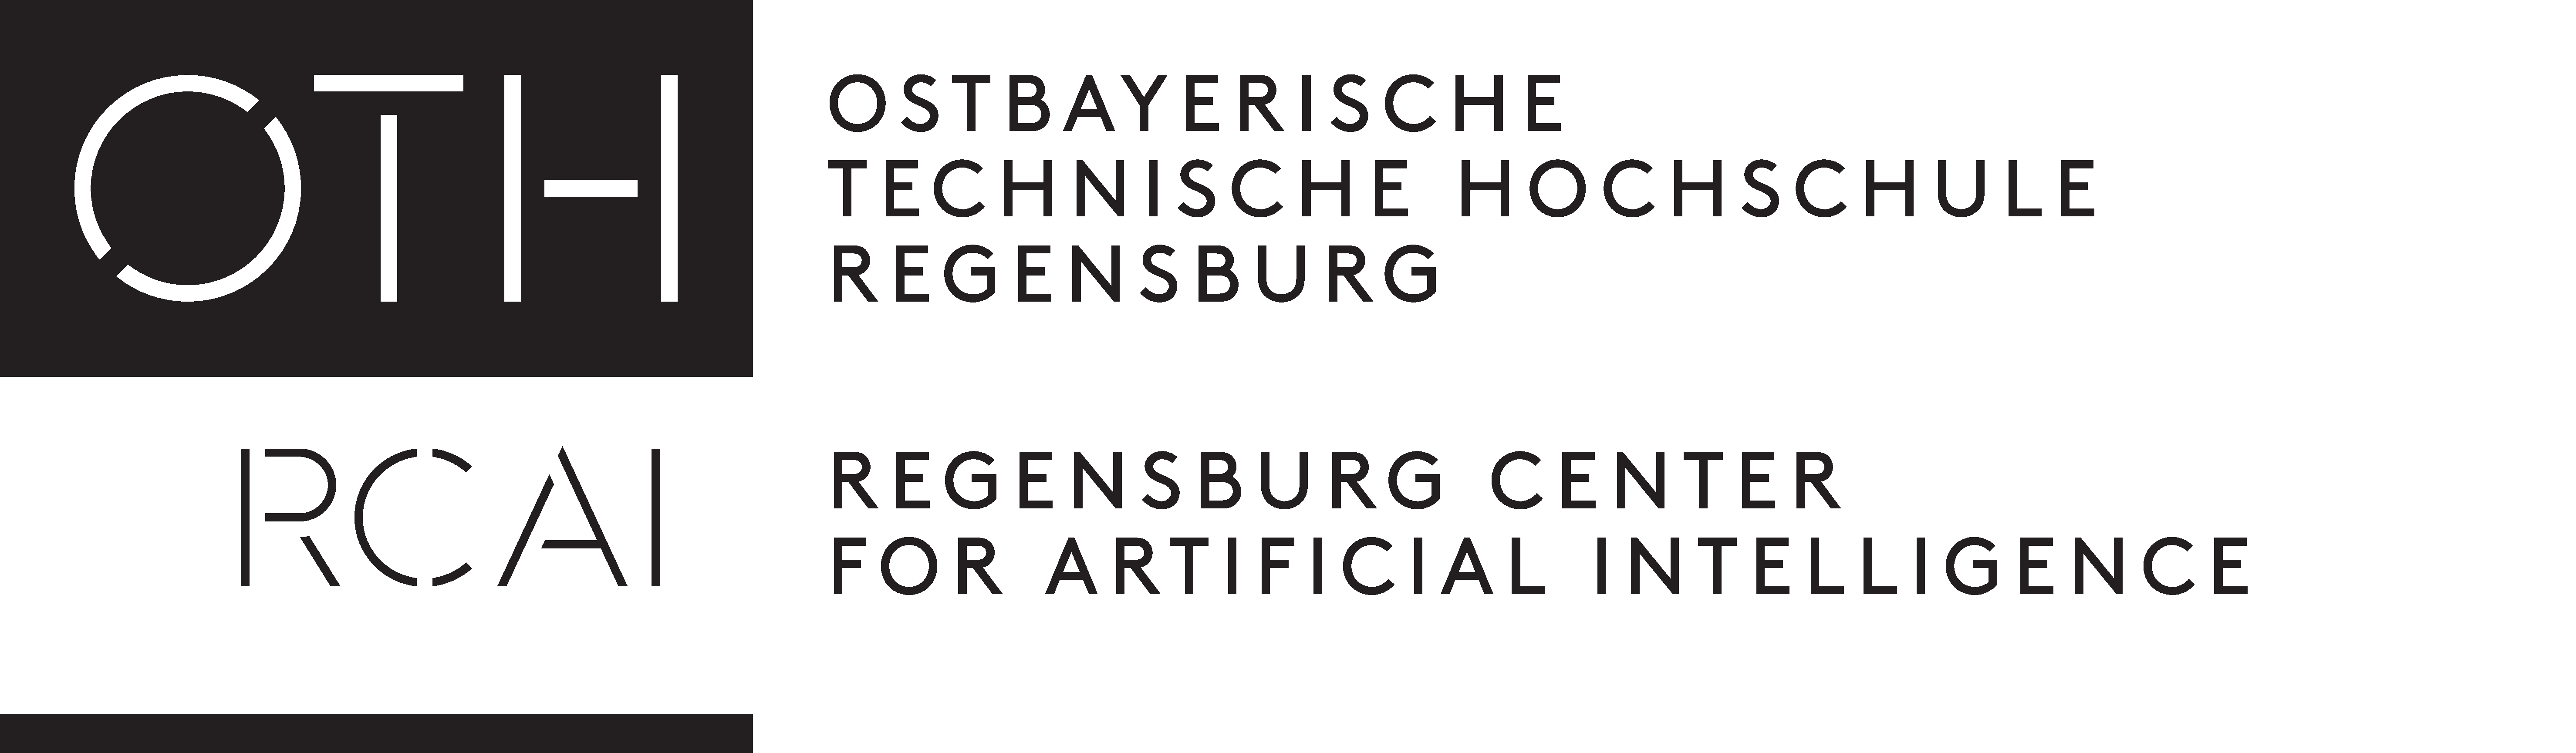 Regensburg Center for Artificial Intelligence Logo